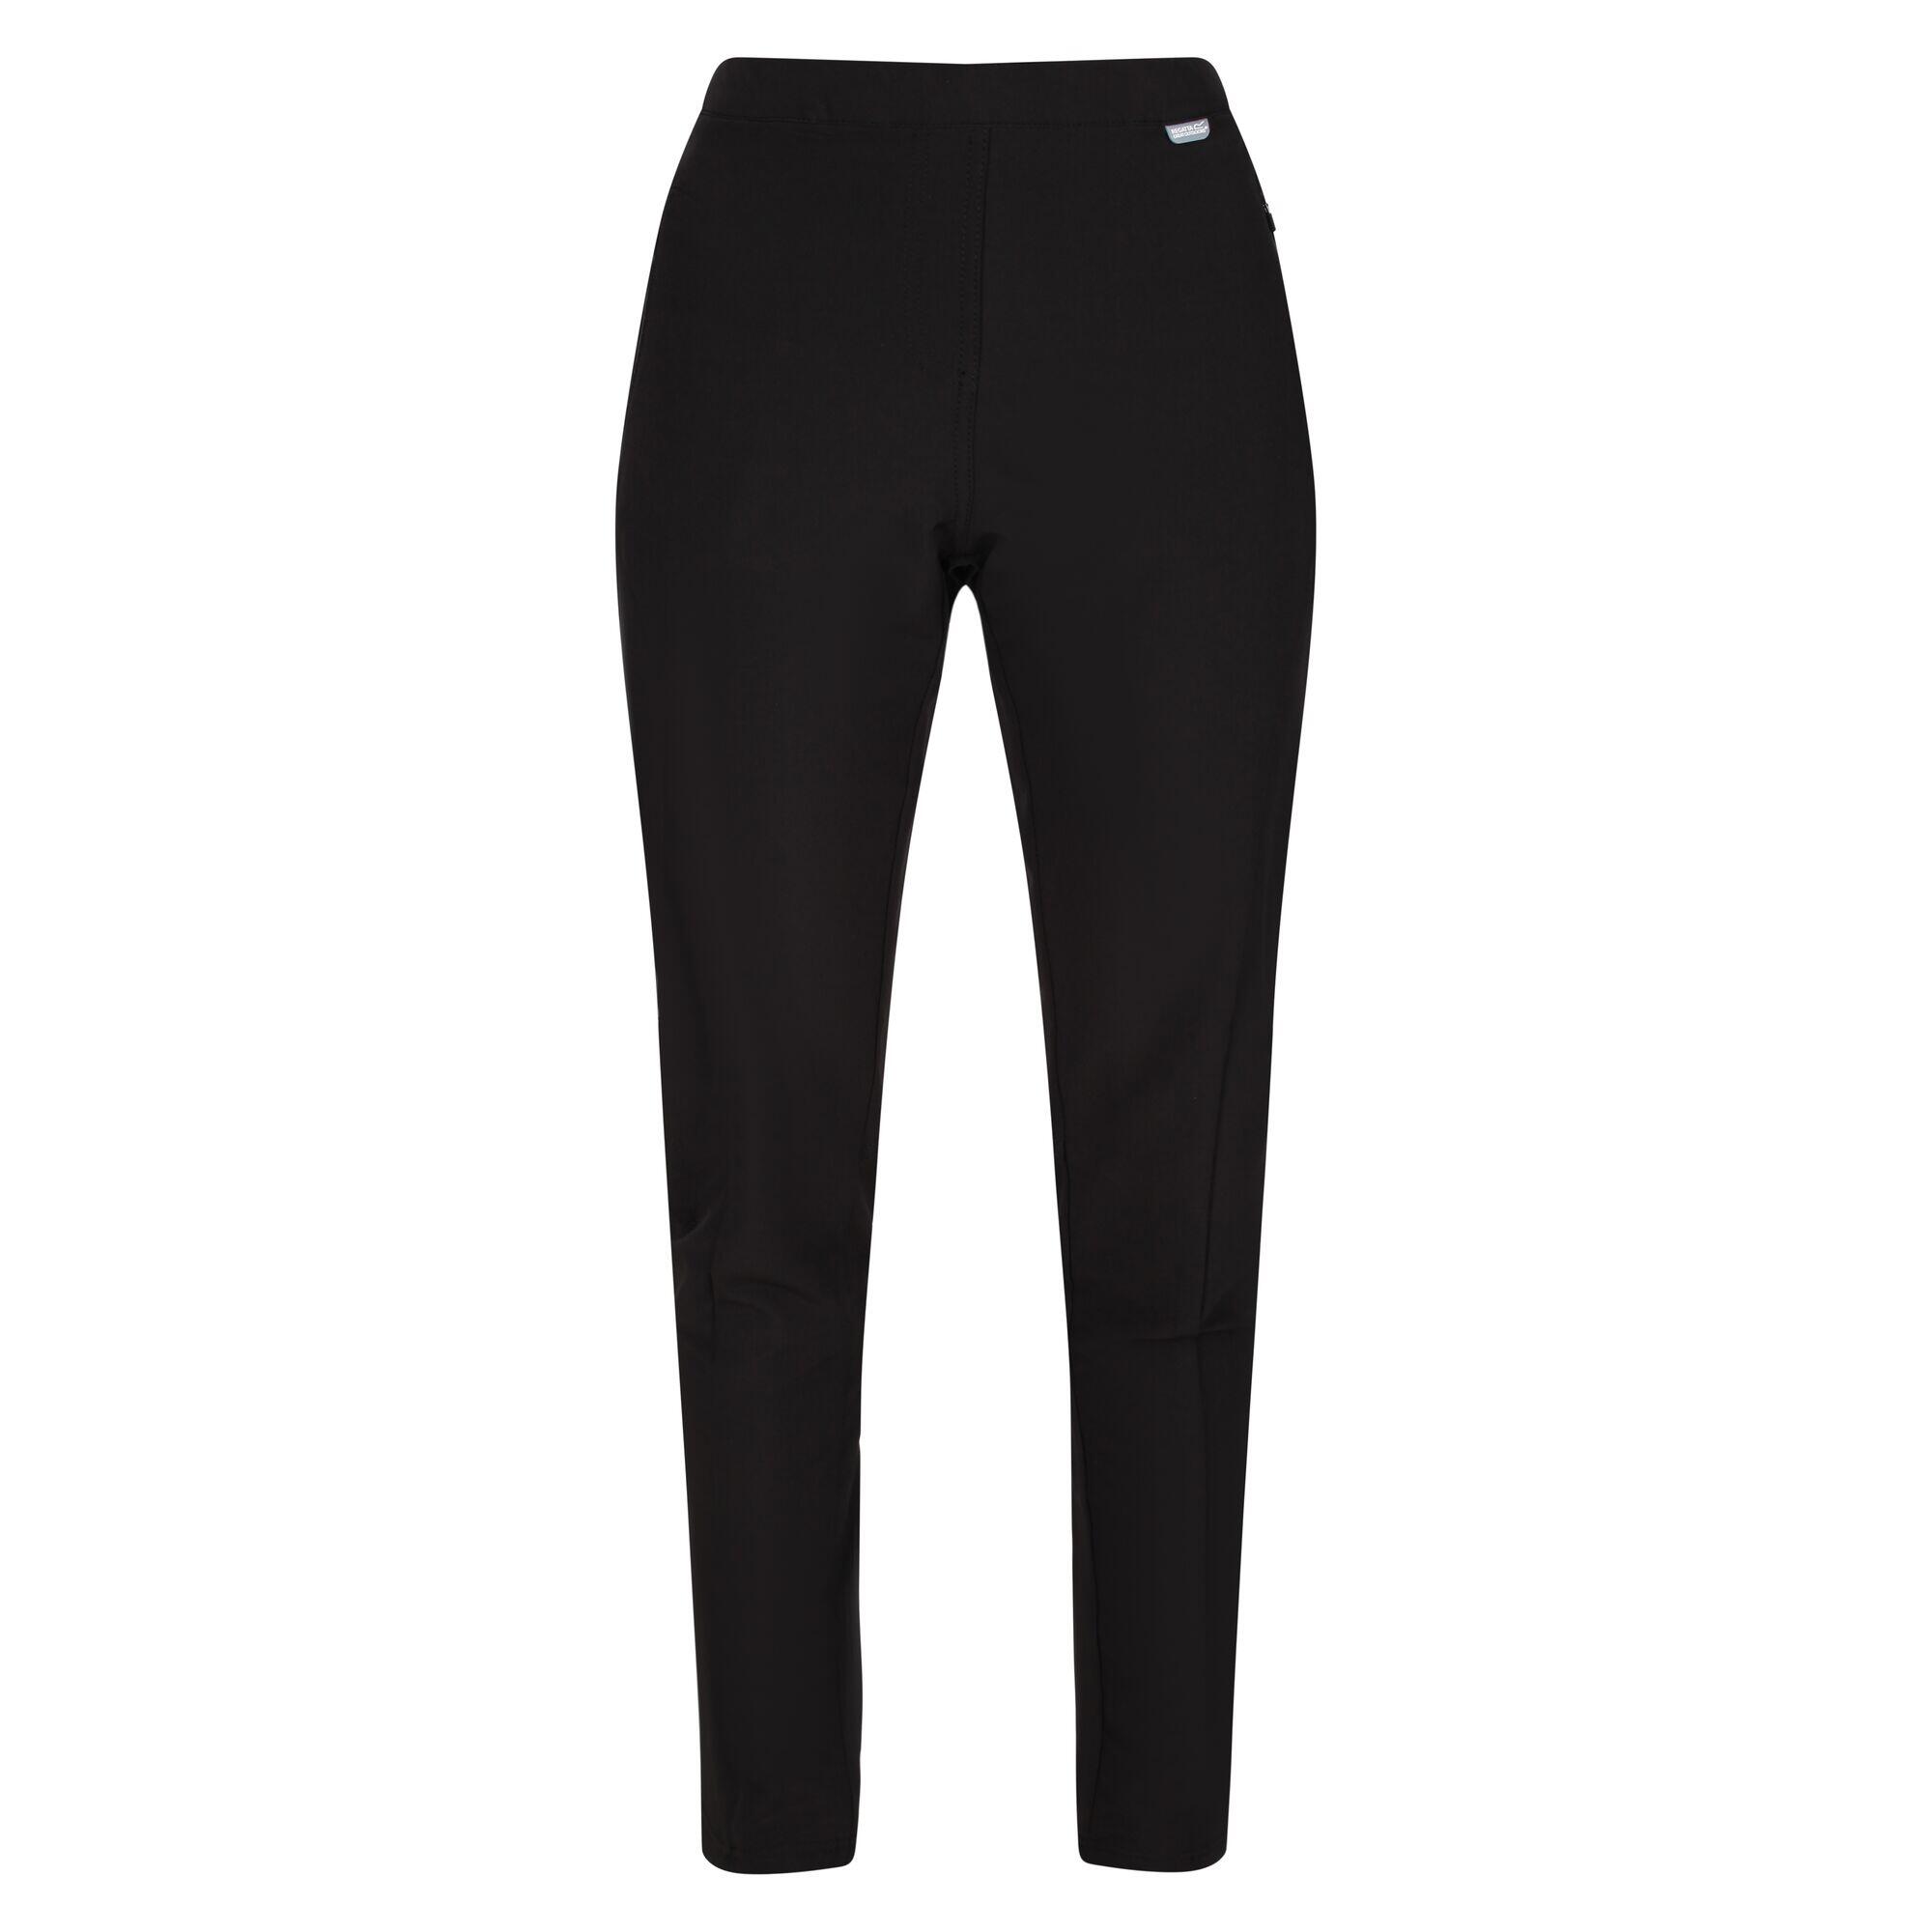 Pentre Stretch Women's Hiking Trousers - Black 5/5